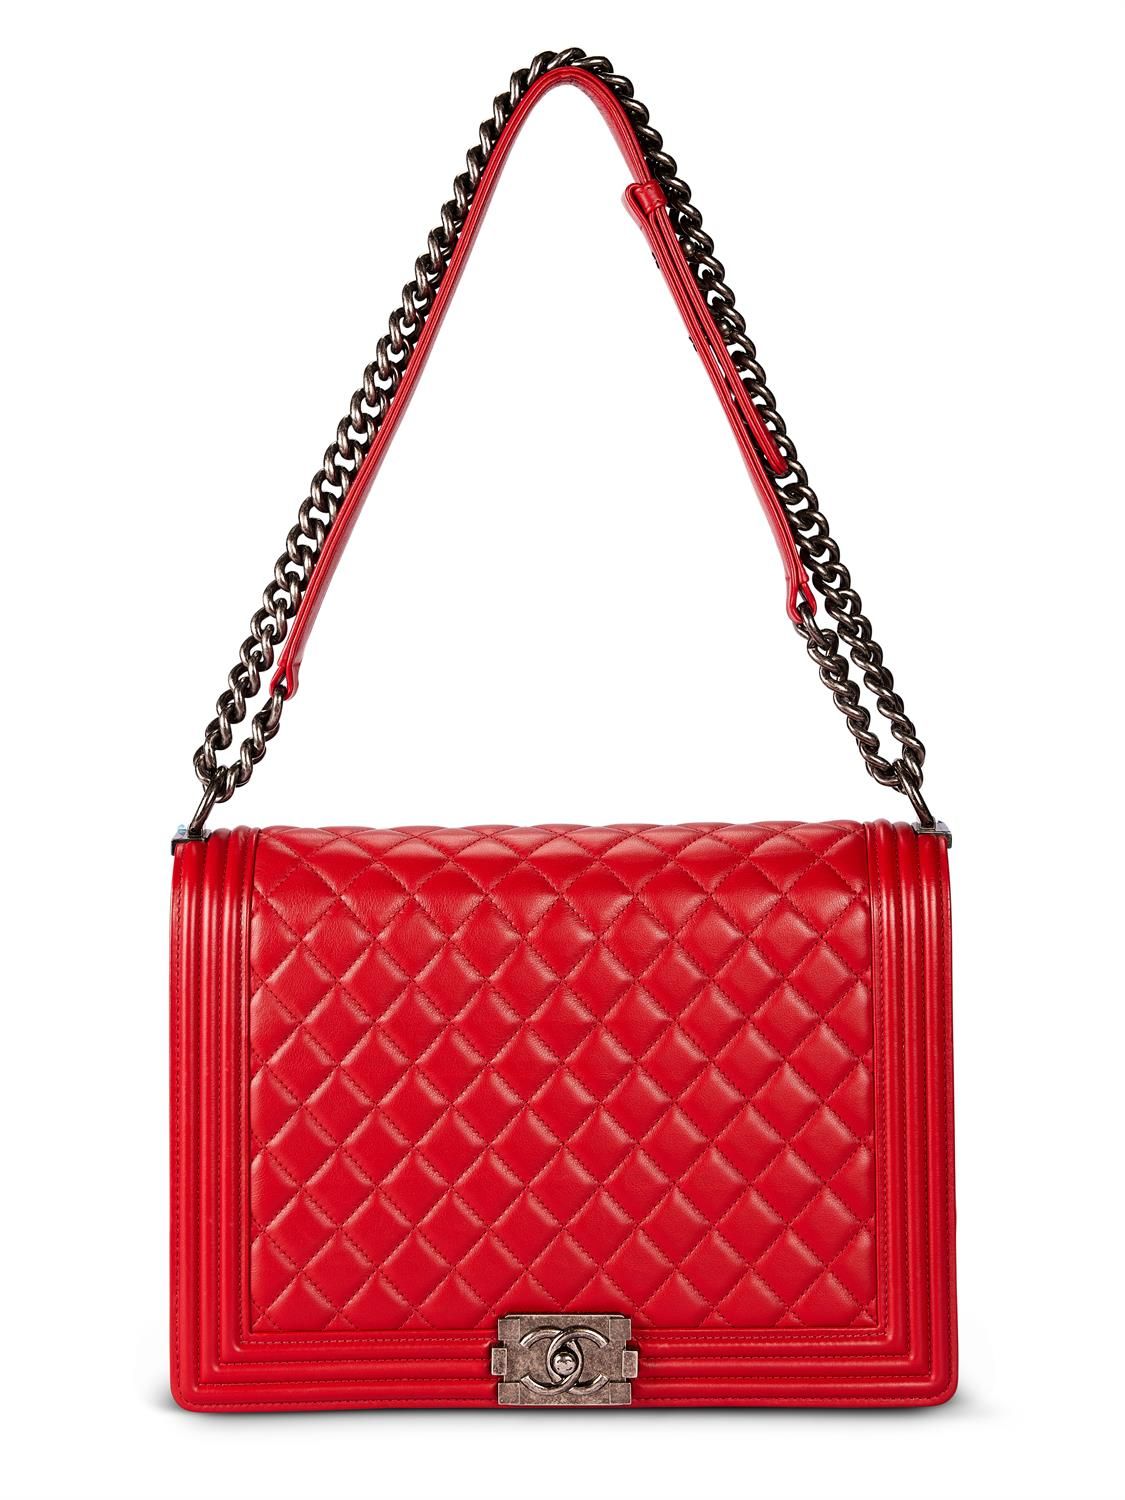 Chanel, Boy, a red calfskin quilted leather shoulder bag Chanel, Boy, un sac à b&hellip;